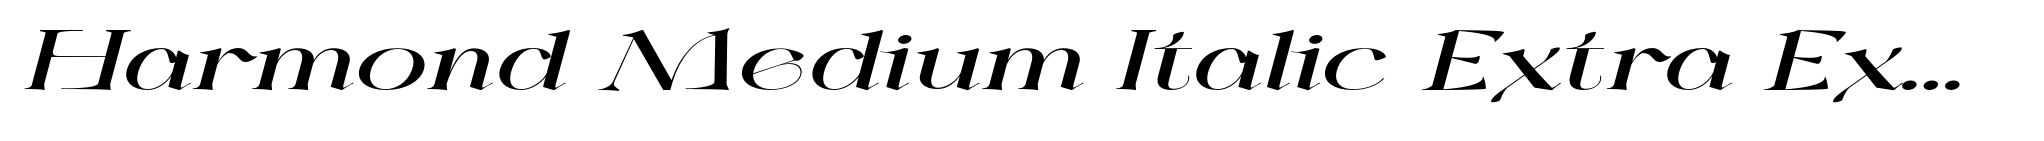 Harmond Medium Italic Extra Expanded image